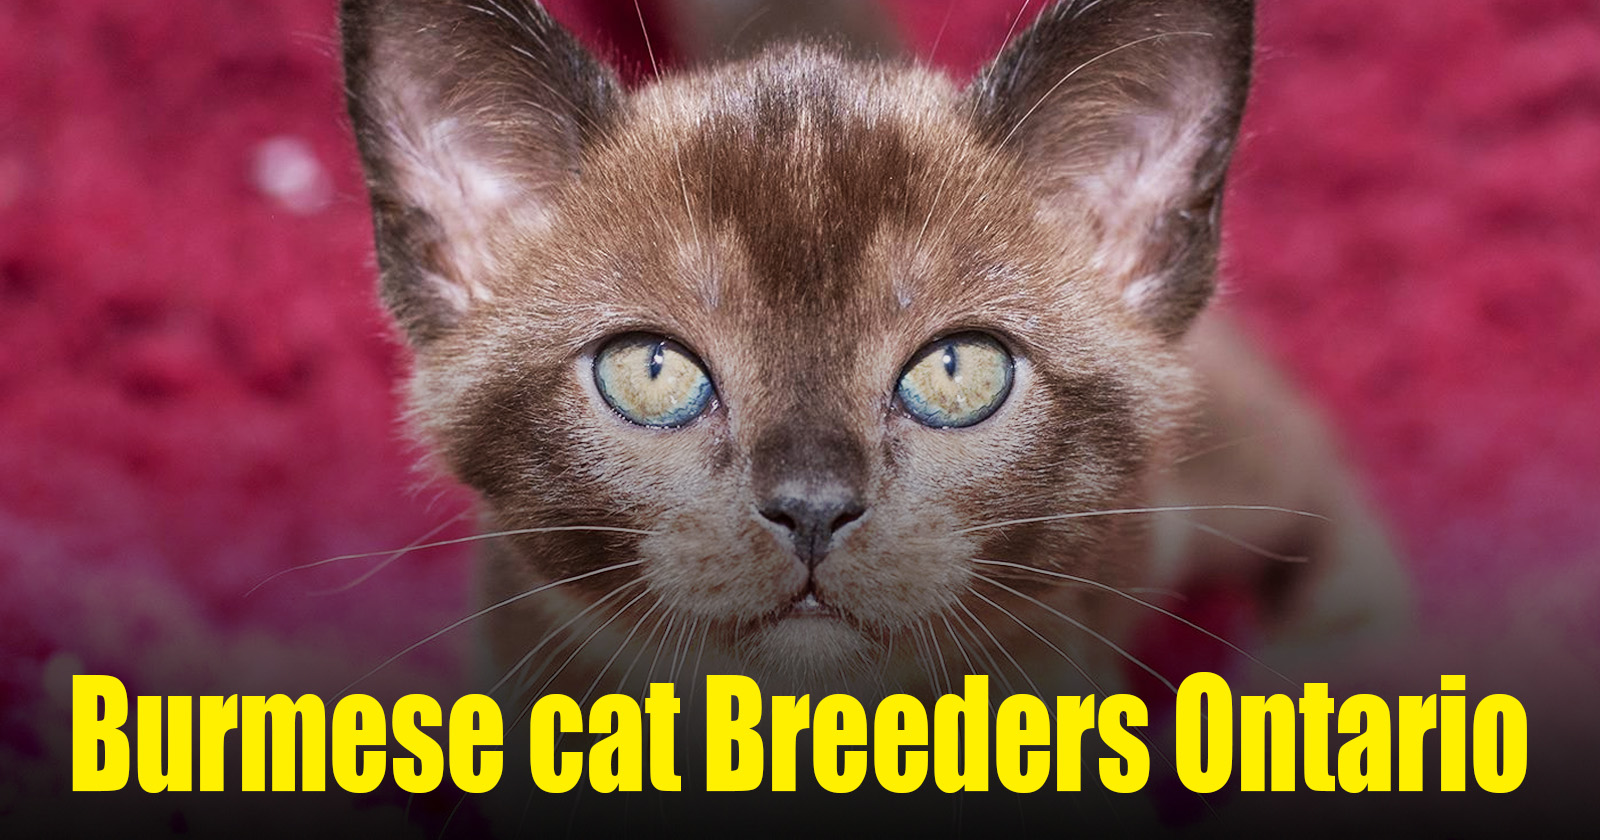 Burmese Cat Breeders Ontario | Kittens & Cats for Sale